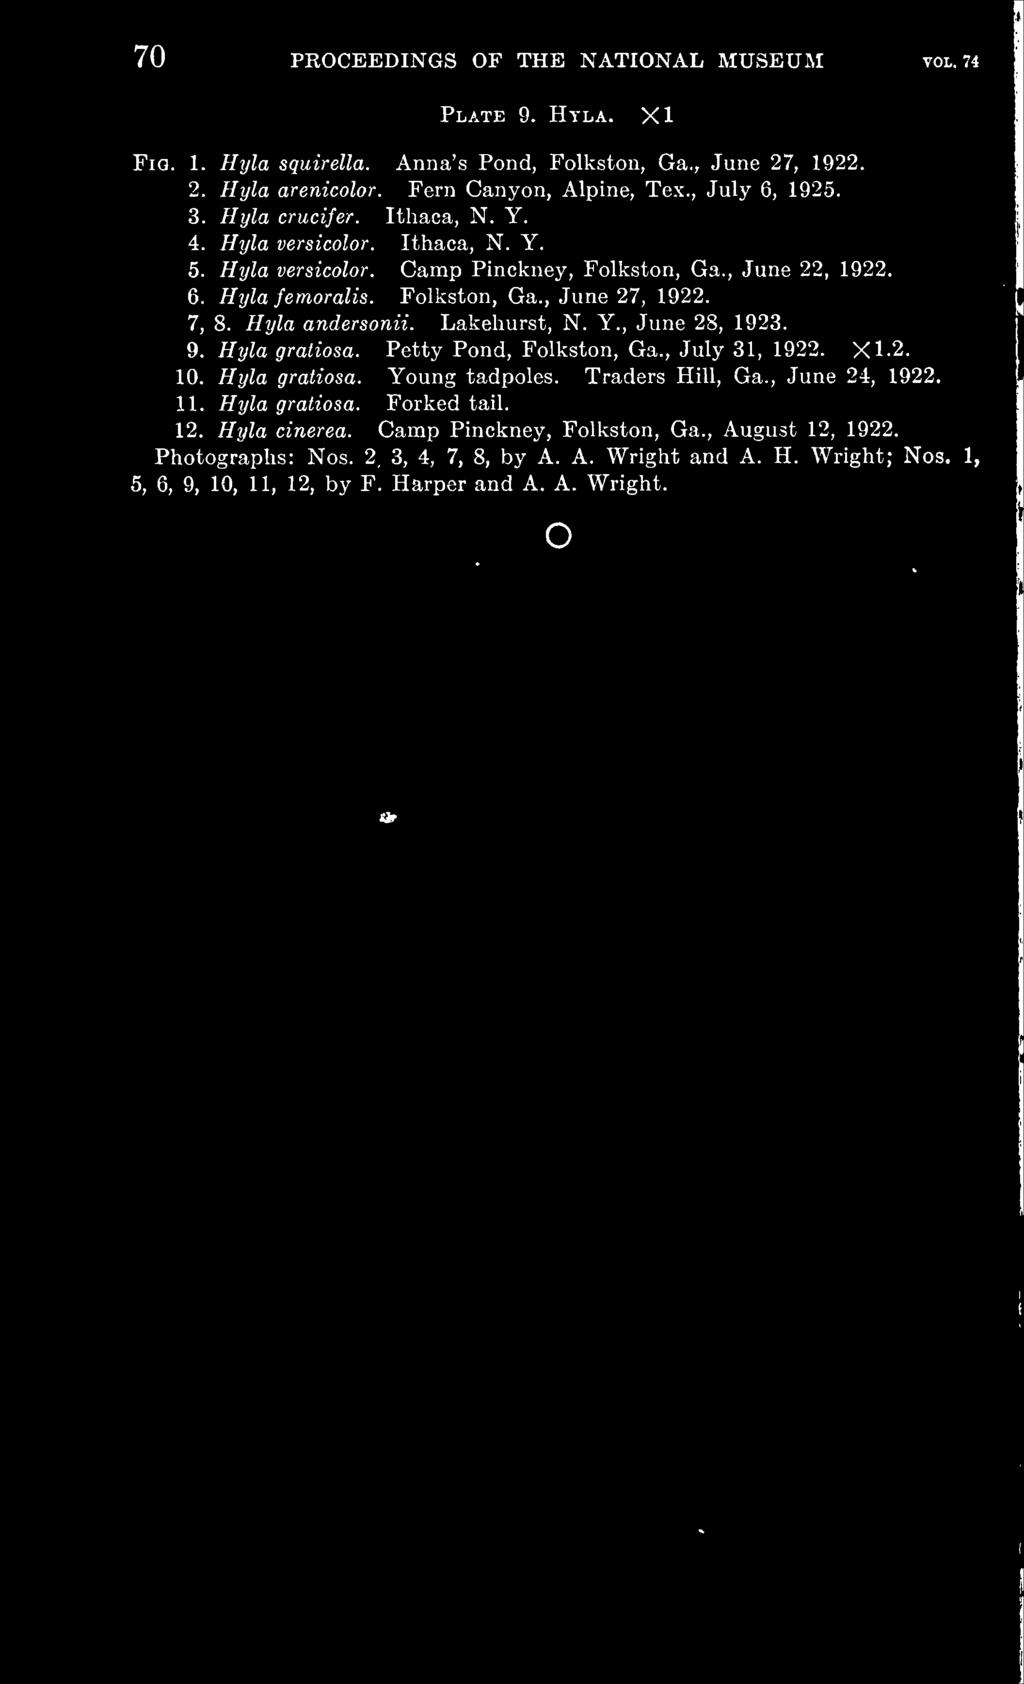 Hyla andersonii. Lakehurst, N. Y., June 28, 1923. 9. Hyla gratiosa. Petty Pond, Folkston, Ga., July 31, 1922. Xl.2. 10. Hyla gratiosa. Young tadpoles. Traders Hill, Ga., June 24, 1922. 11.